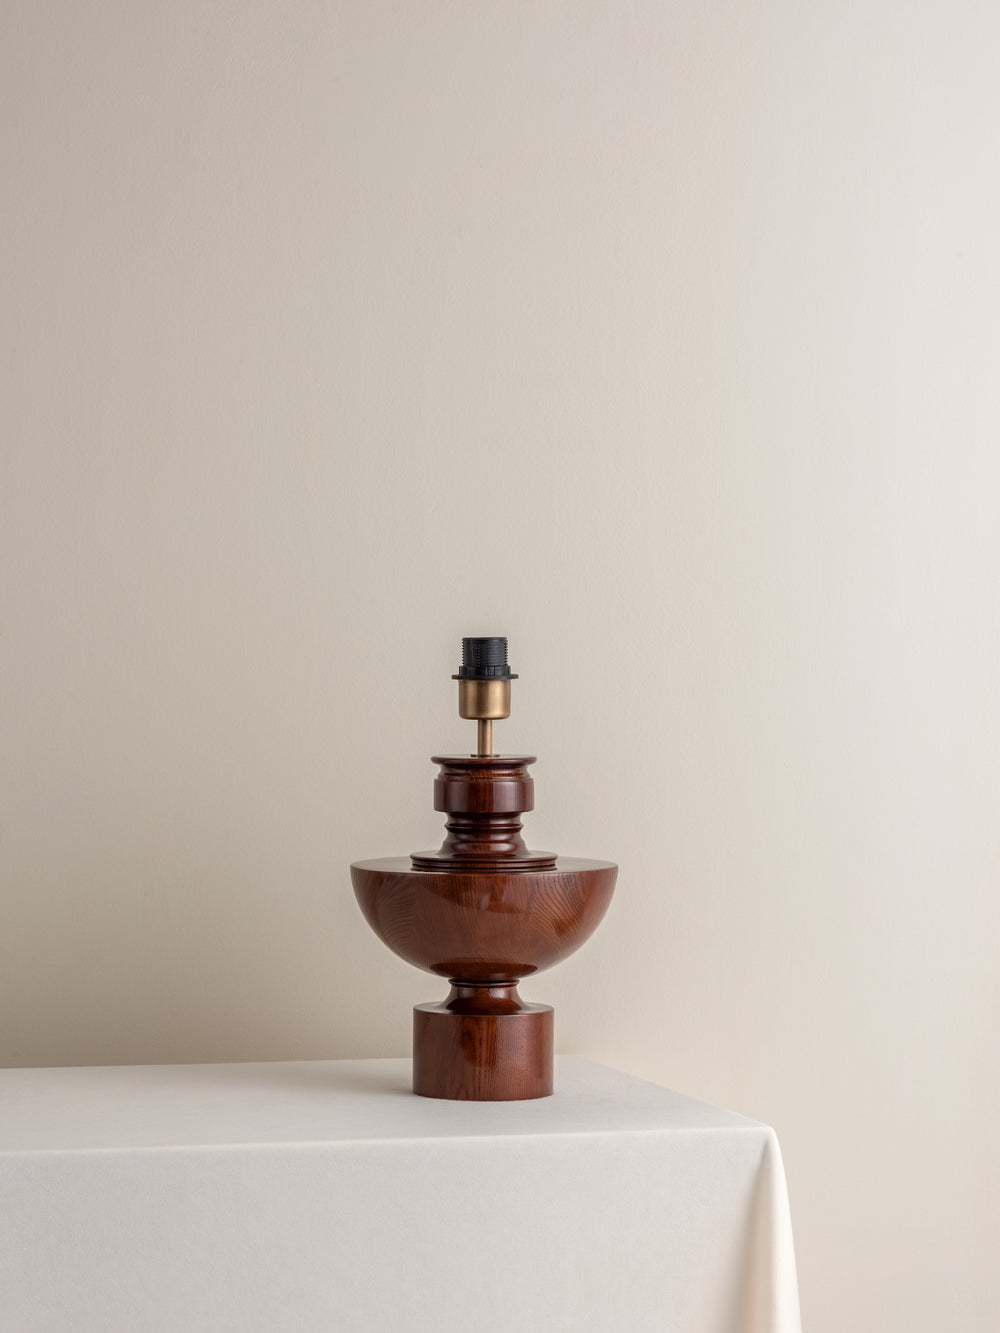 Editions spun wood lamp with + chrome shade | Table Lamp | Lights & Lamps Inc | Modern Affordable Designer Lighting | USA